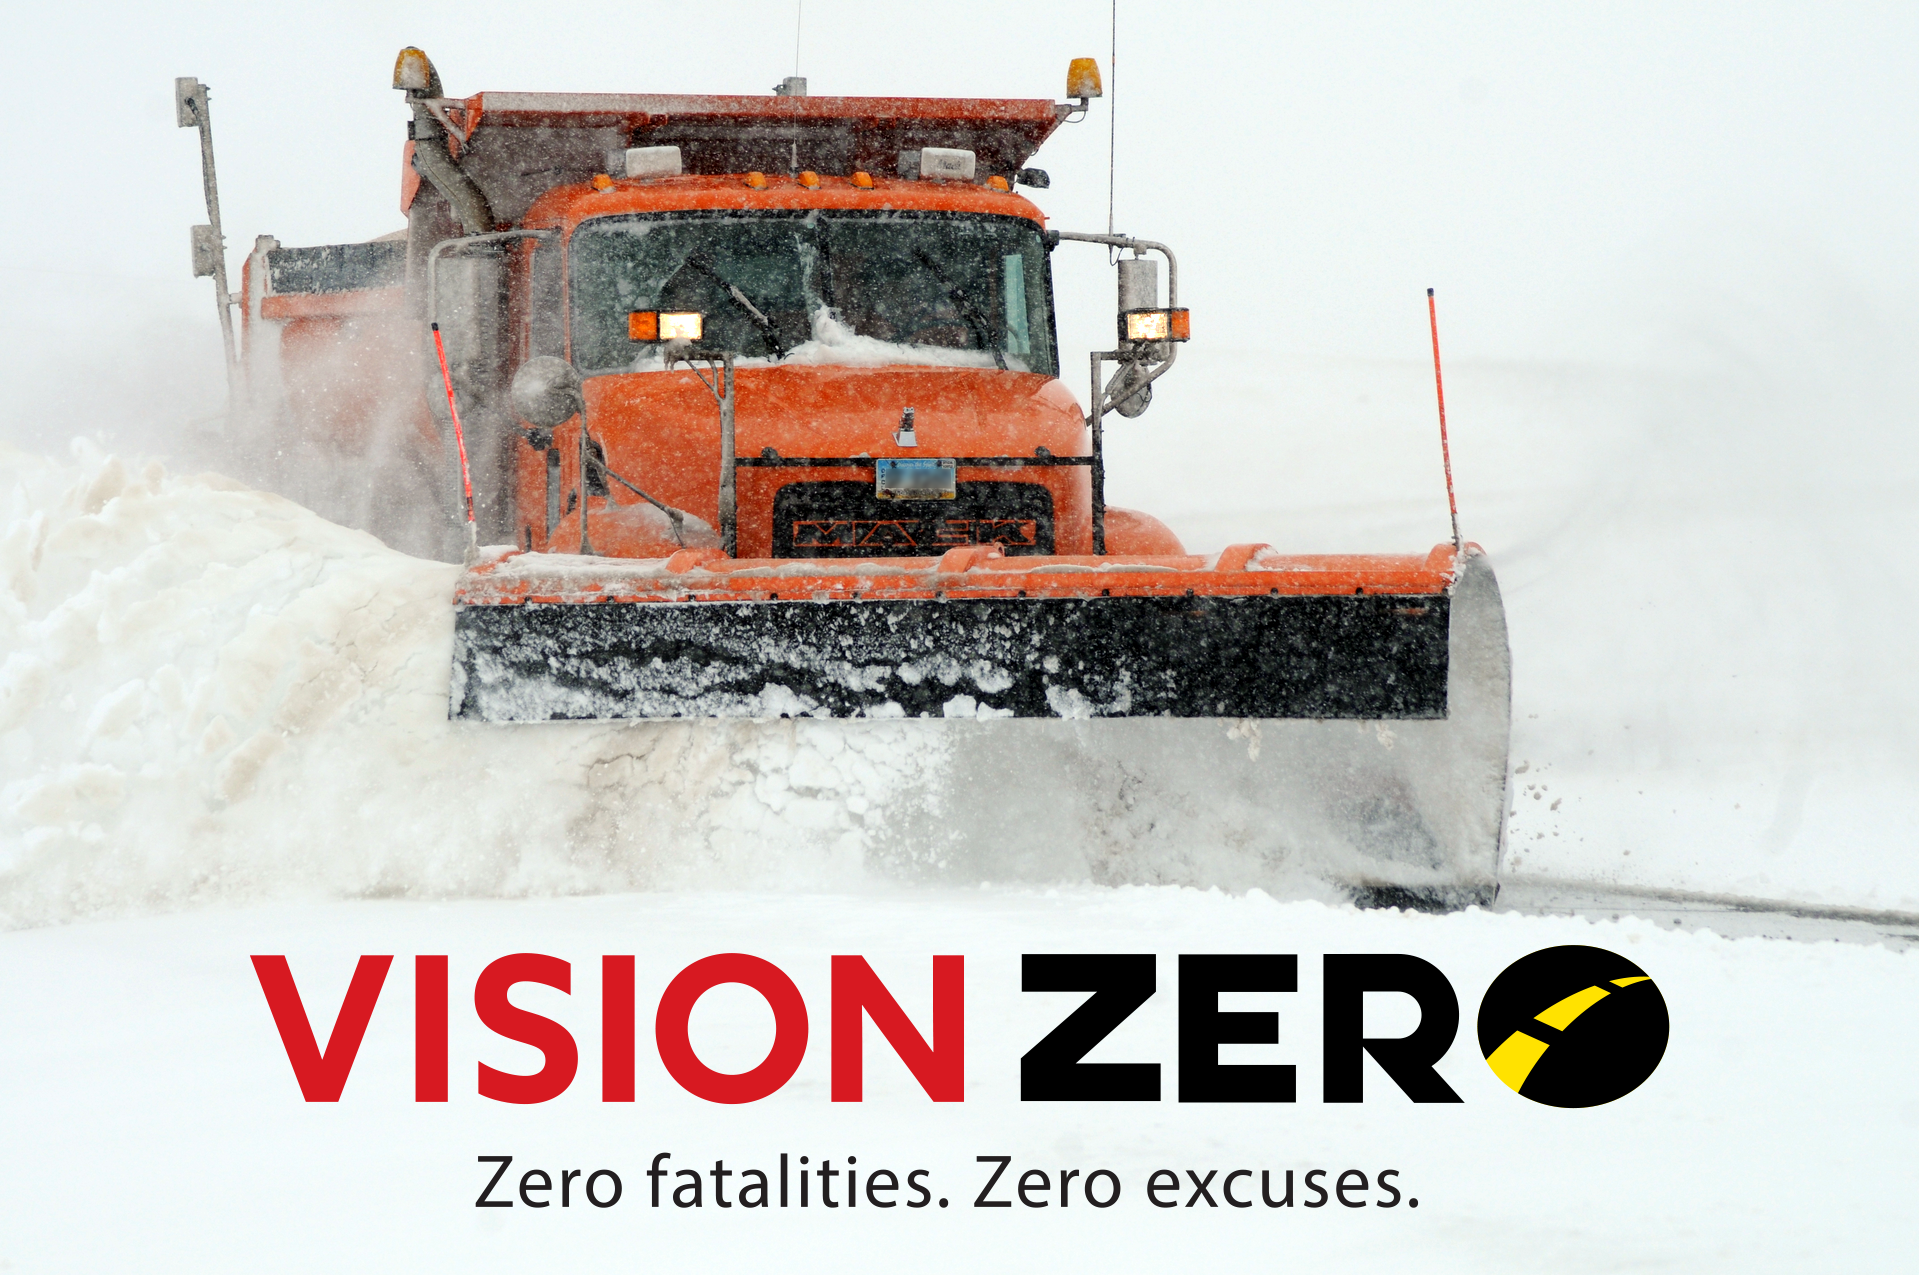 Snow plow pushing snow with Vision Zero logo.